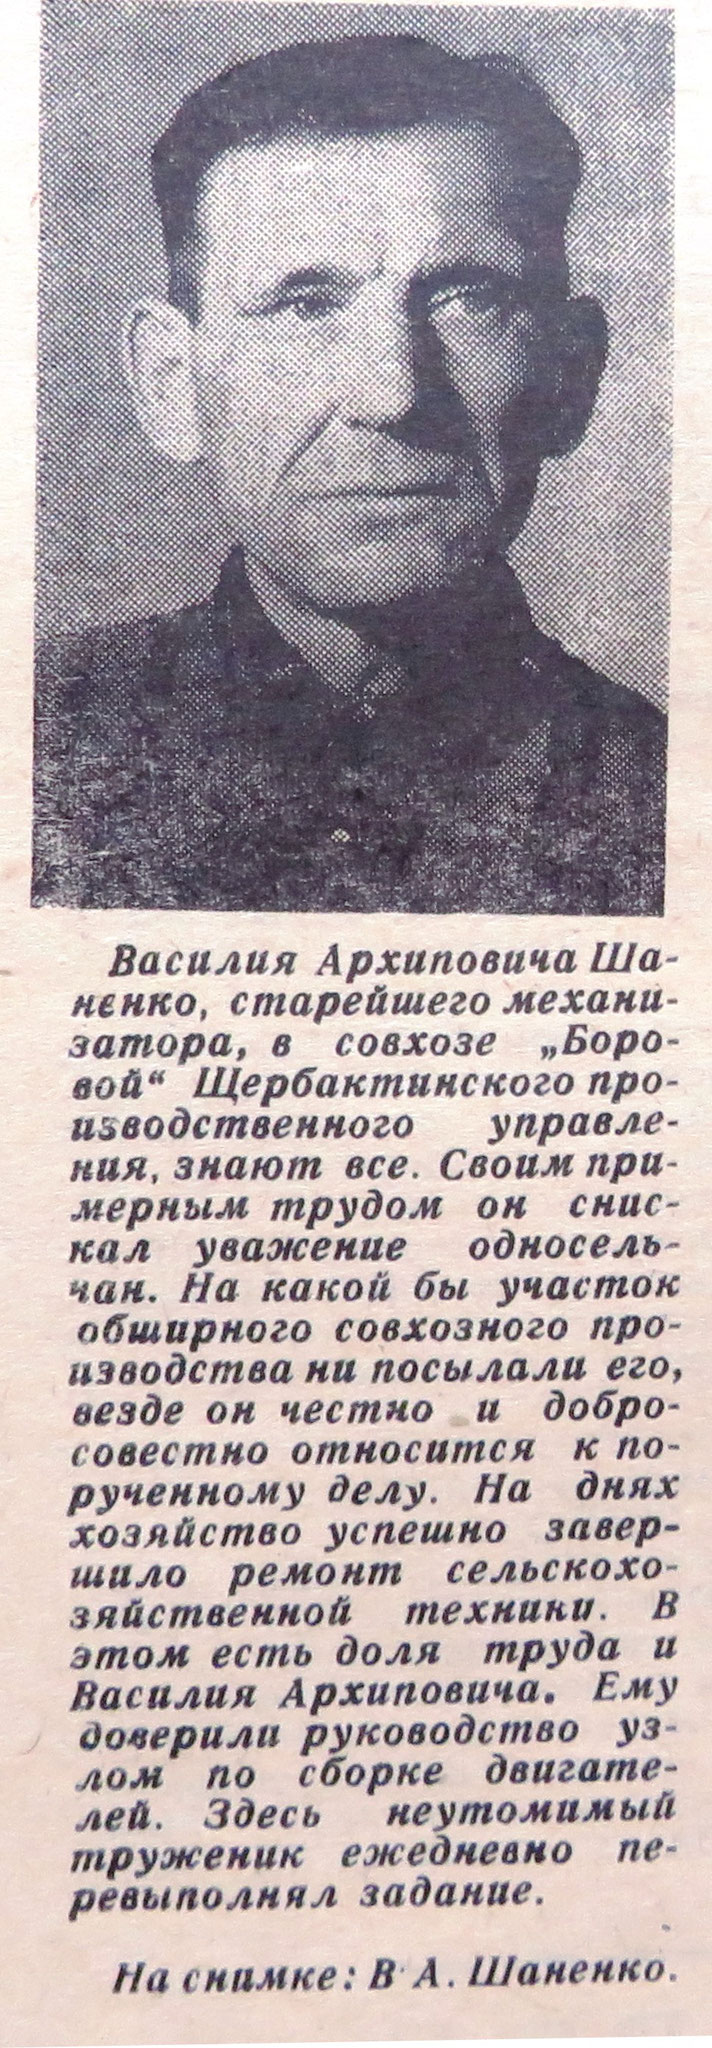 Василий Архипович Шаненко. - Трибуна. - 1963. -  23 марта. - С.2